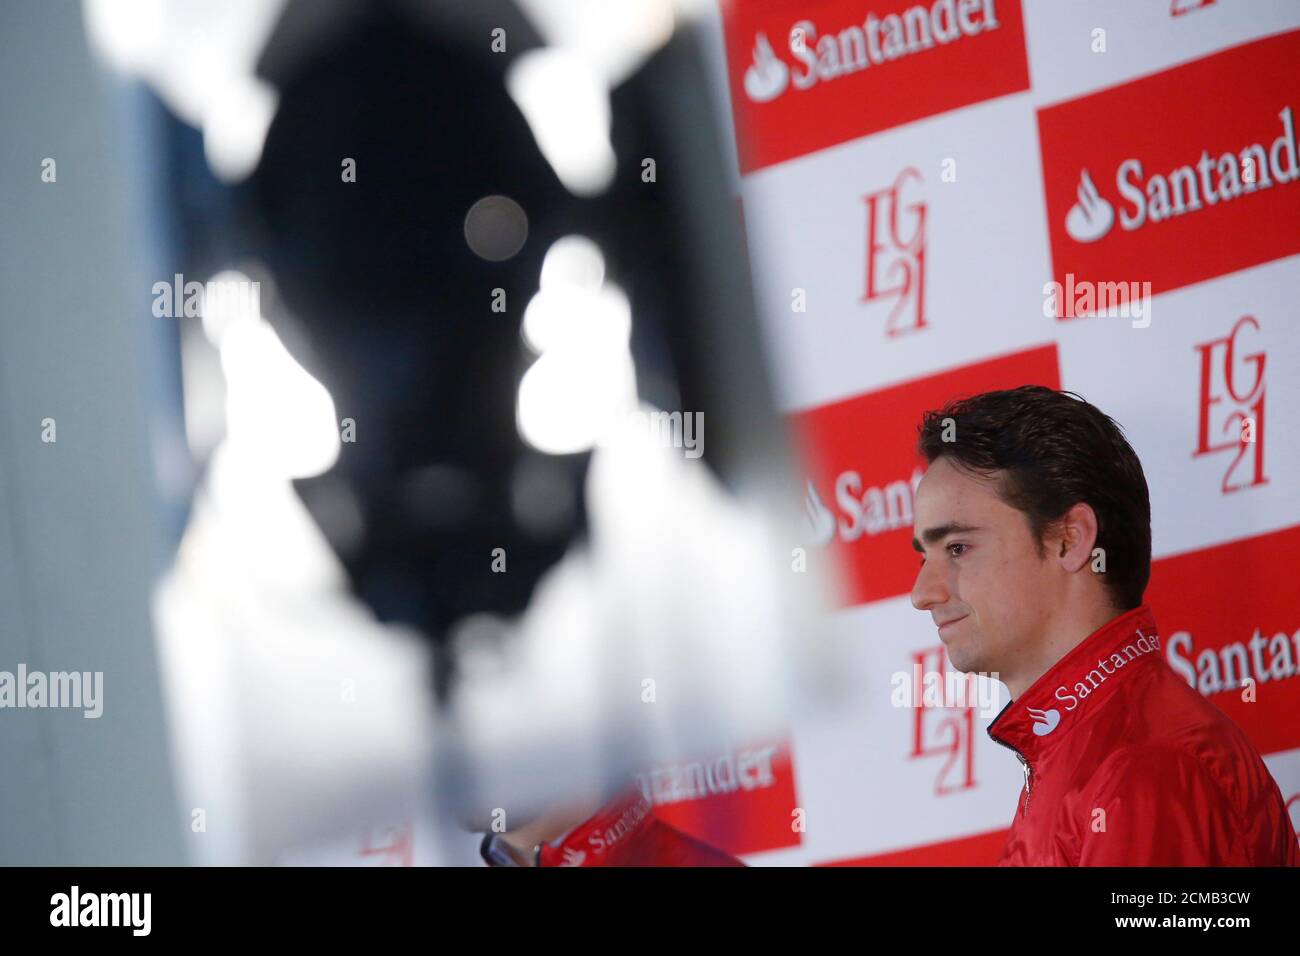 Haas Formula One driver Esteban Gutierrez of Mexico attends a news conference in Mexico City, Mexico, March 9, 2016. REUTERS/Edgard Garrido Stock Photo